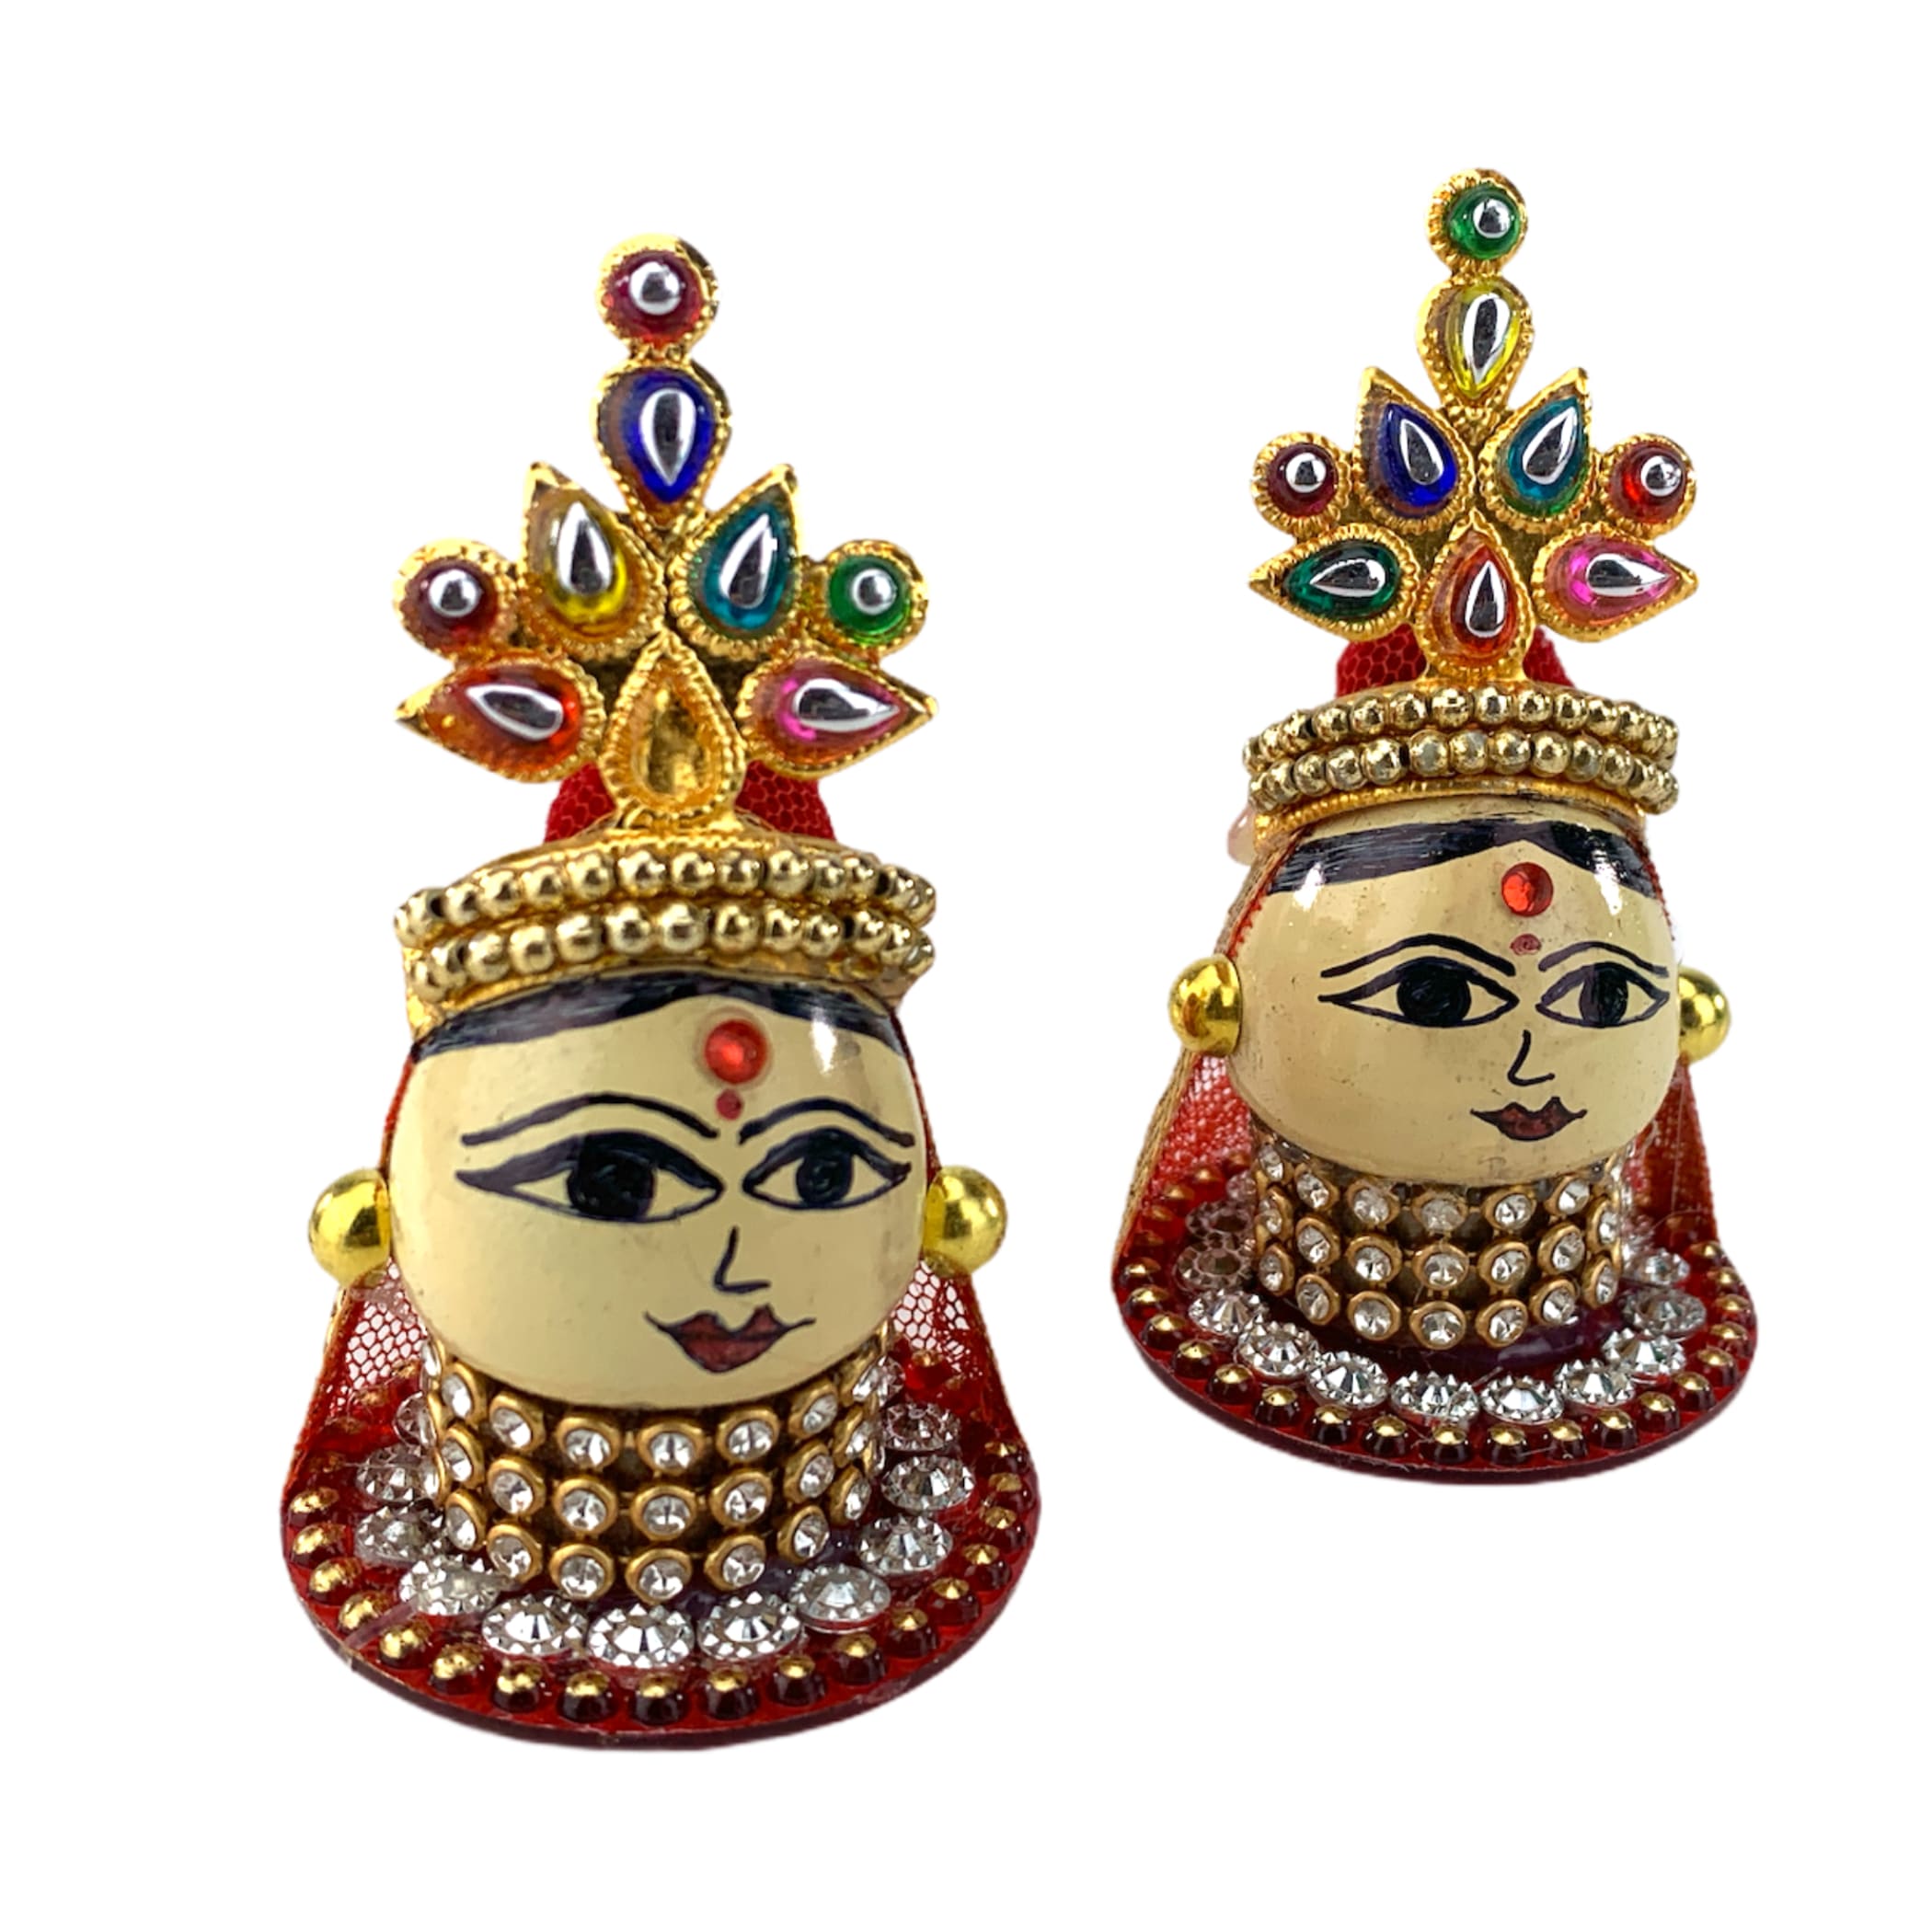 Riddhi siddhi goddess set idols vastushastra spouse